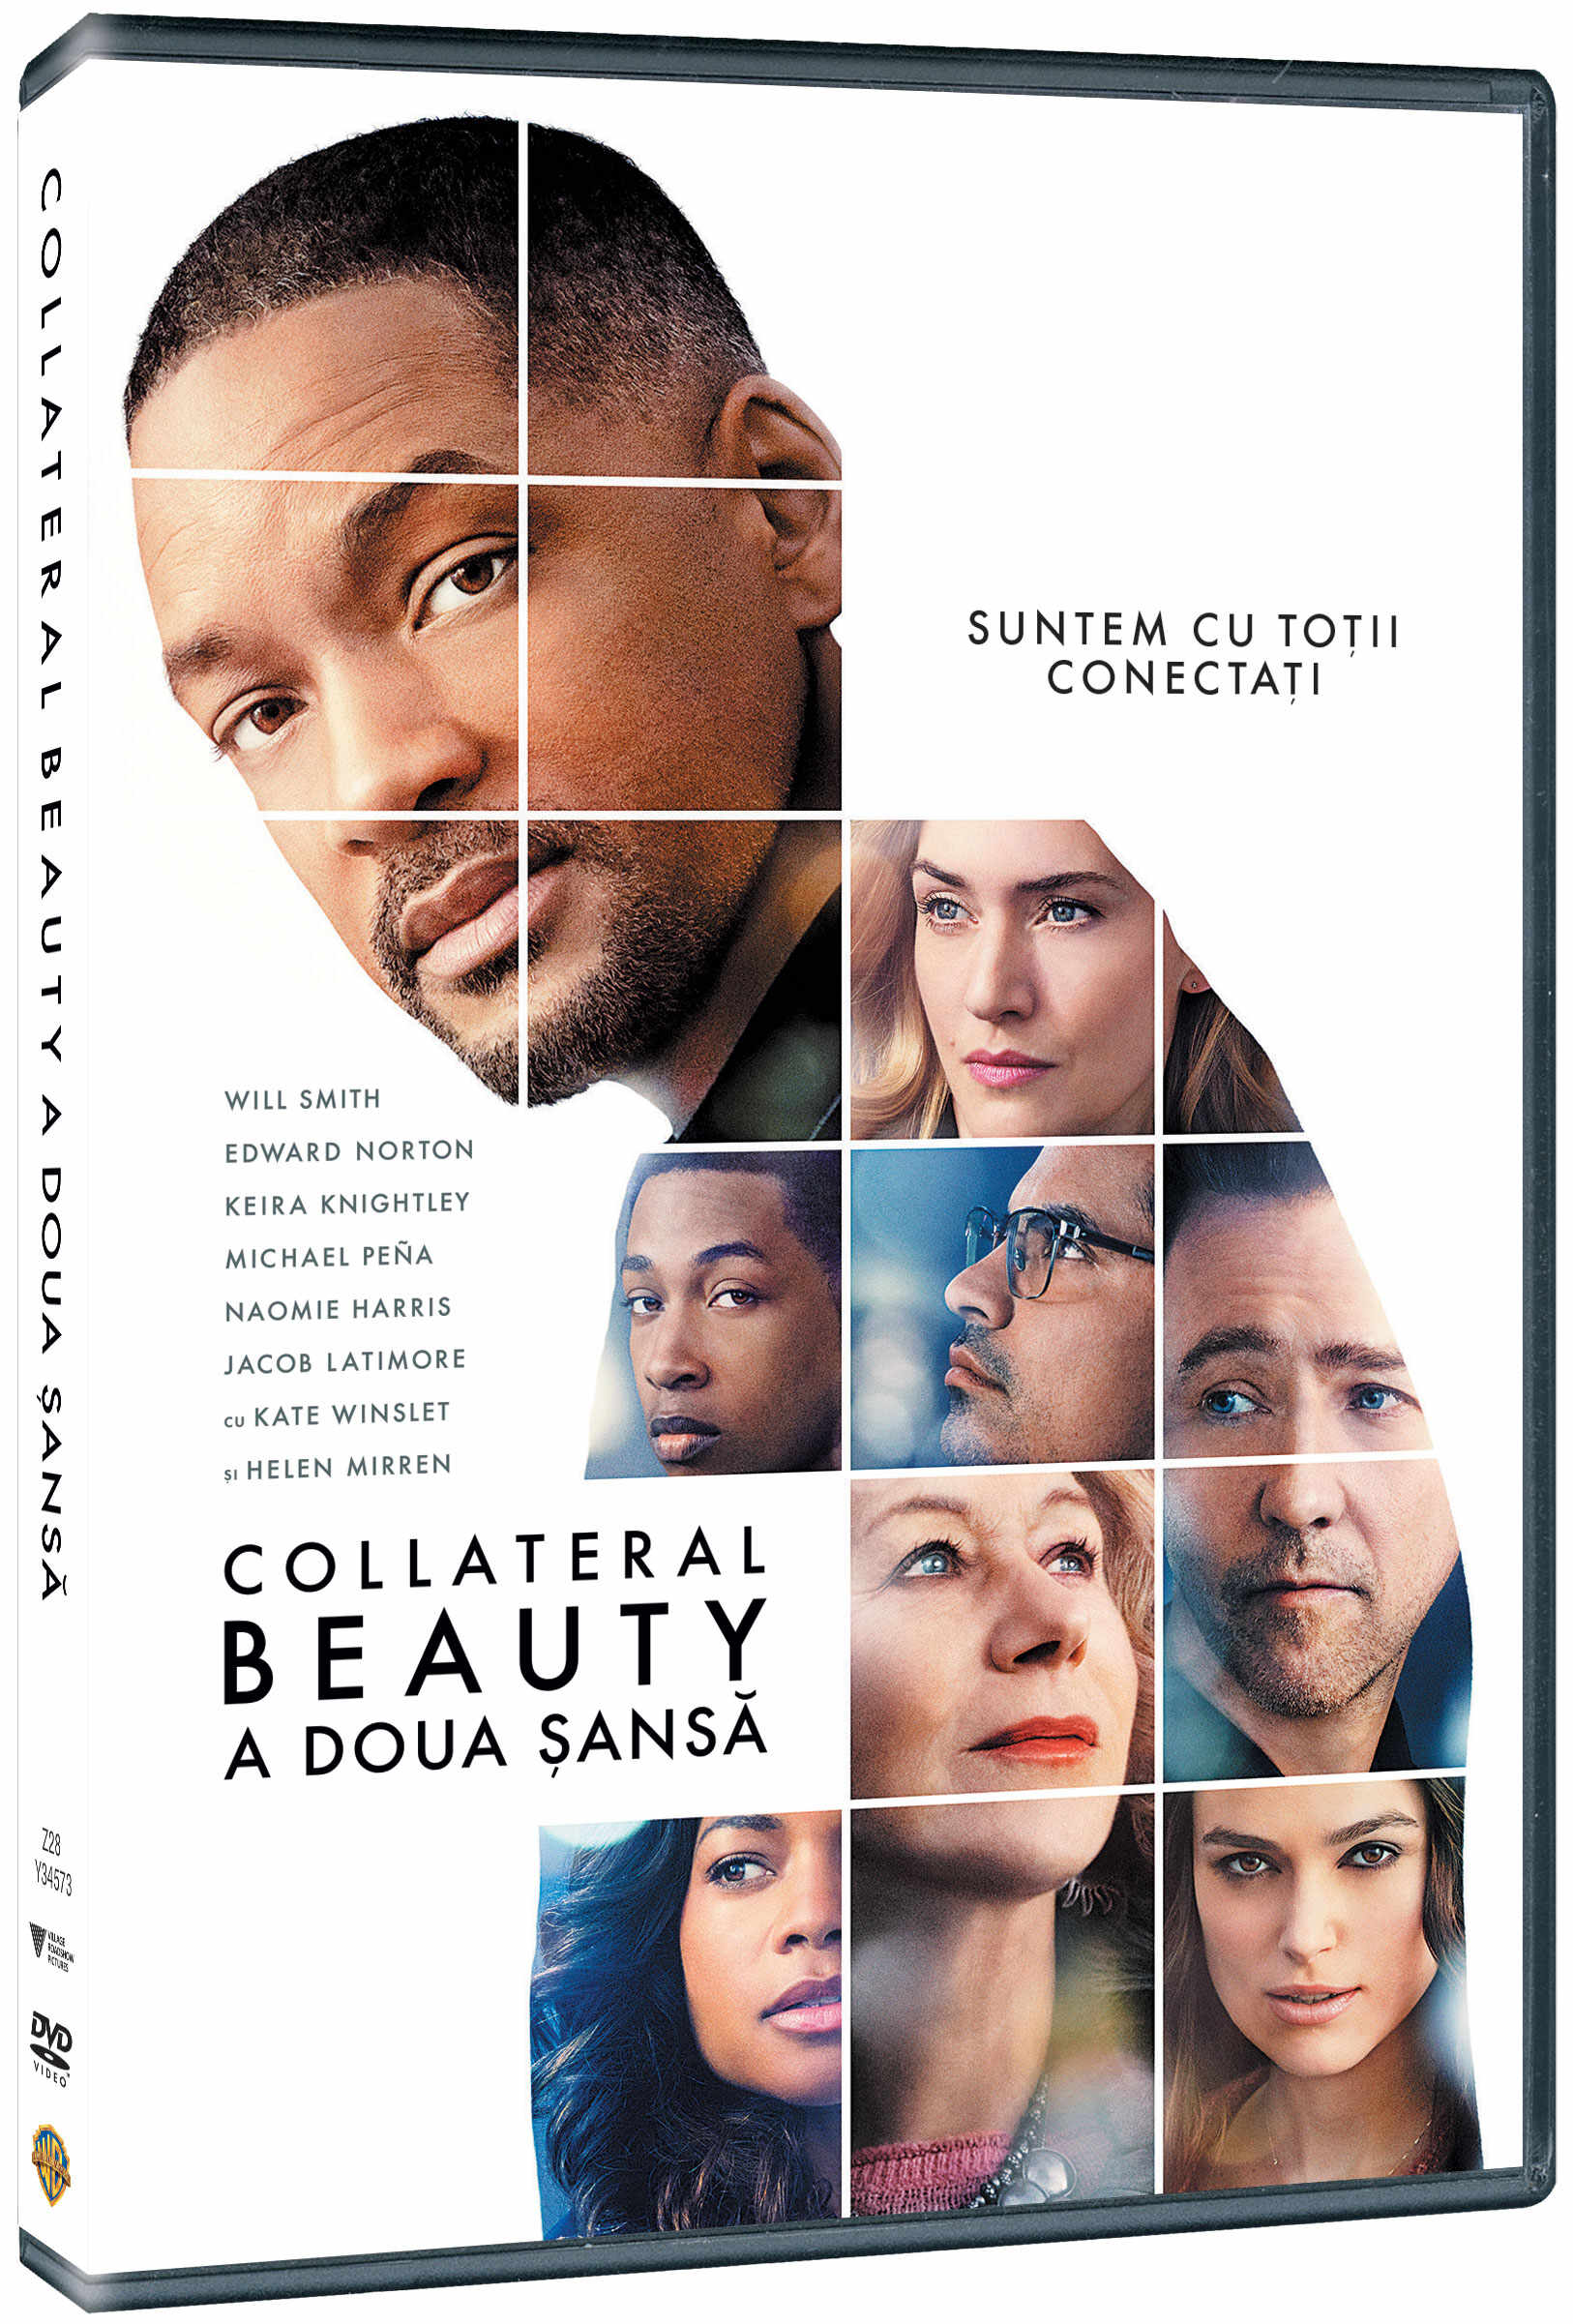 Collateral Beauty: A doua sansa / Collateral Beauty | David Frankel